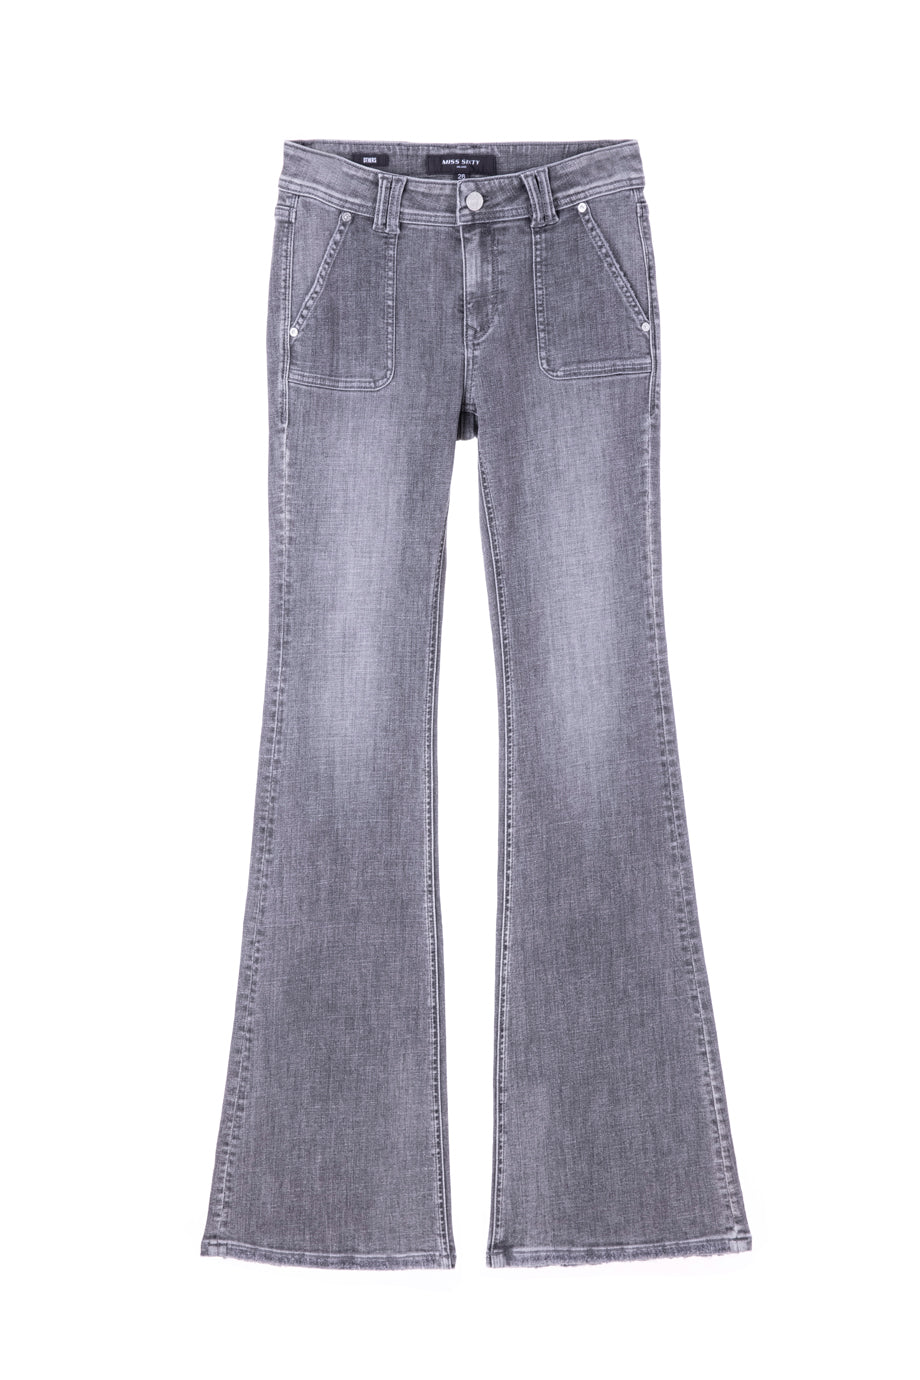 JJ2840 Denim jeans